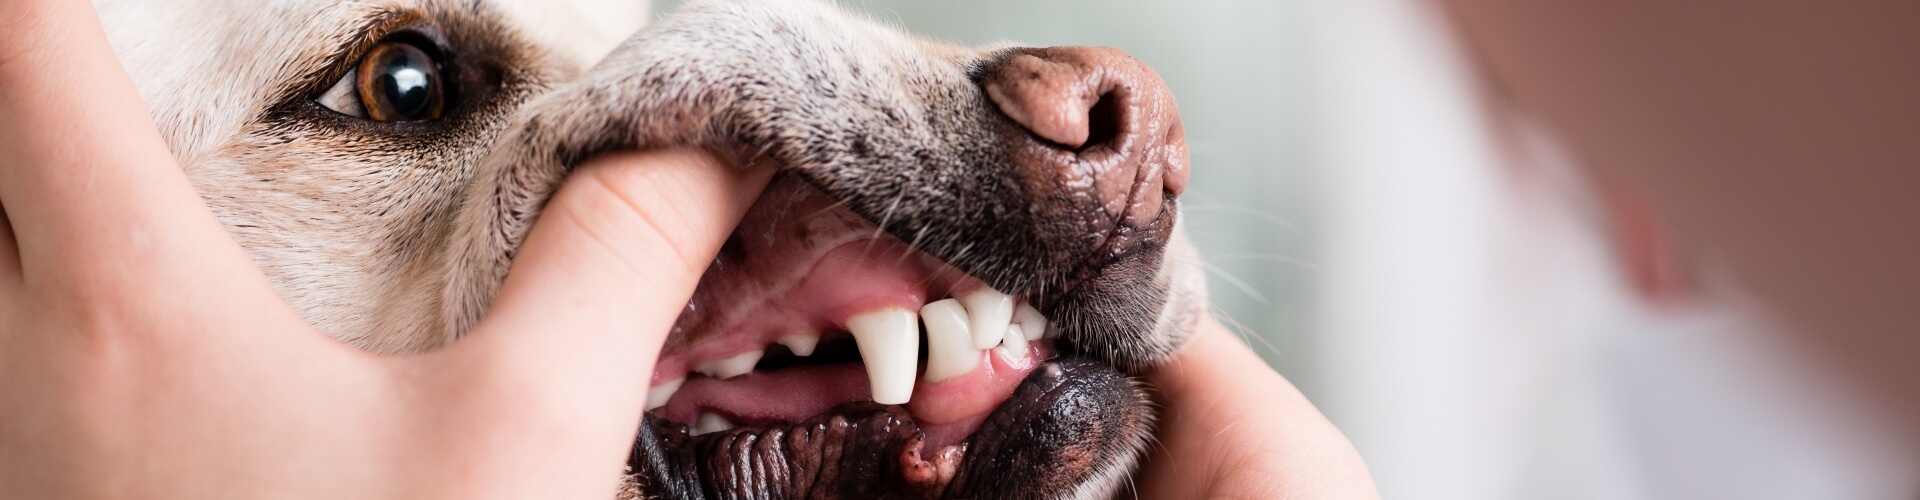 PETPROTECT Magazin: Zahngesundheit bei Hunden